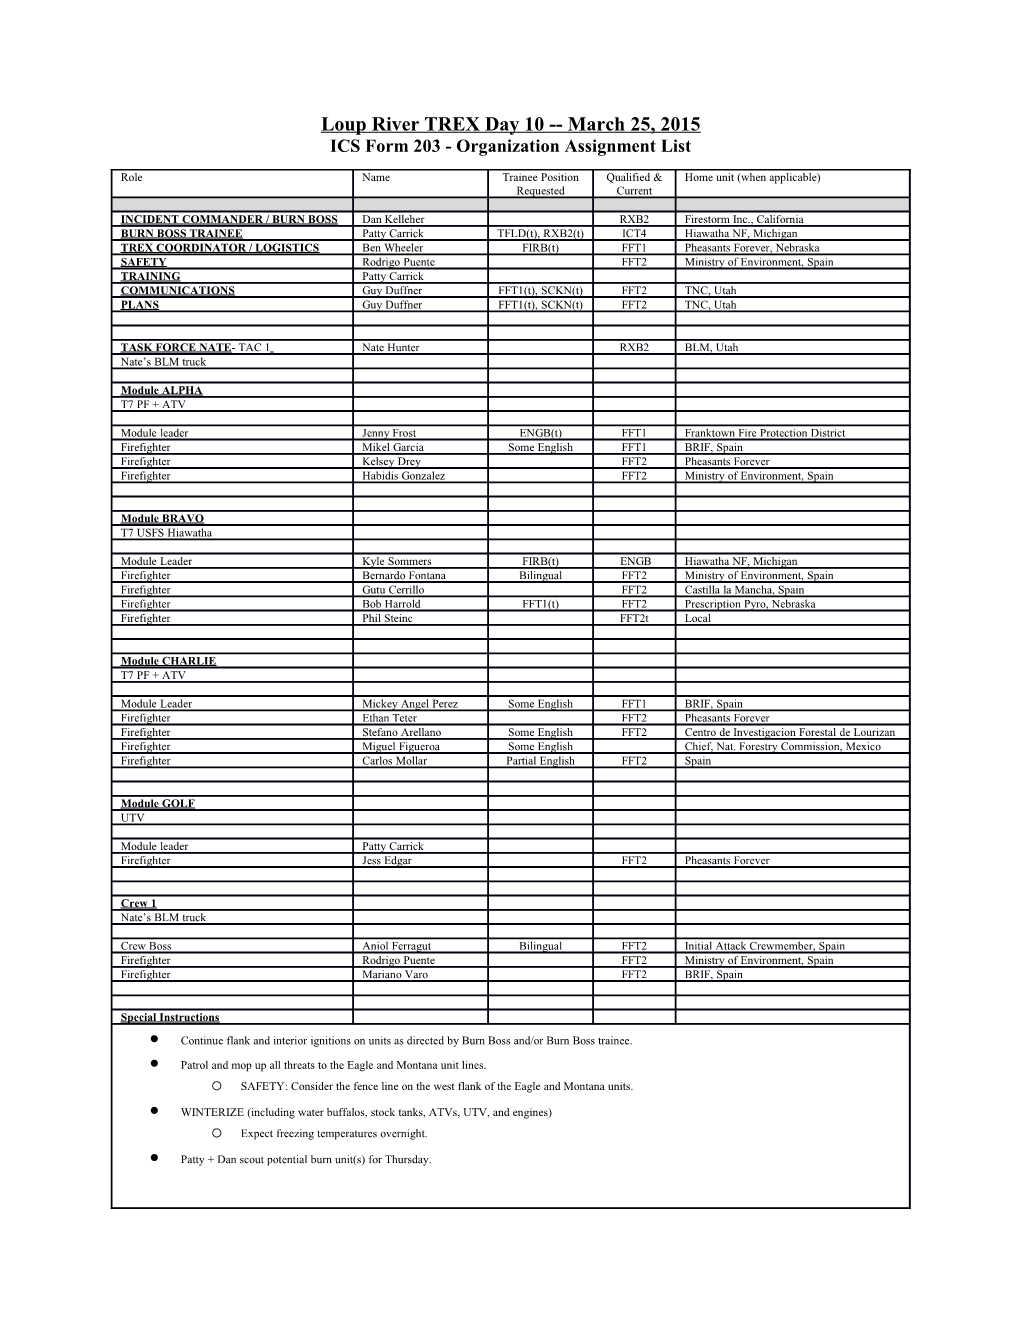 ICS Form 203 - Organization Assignment List